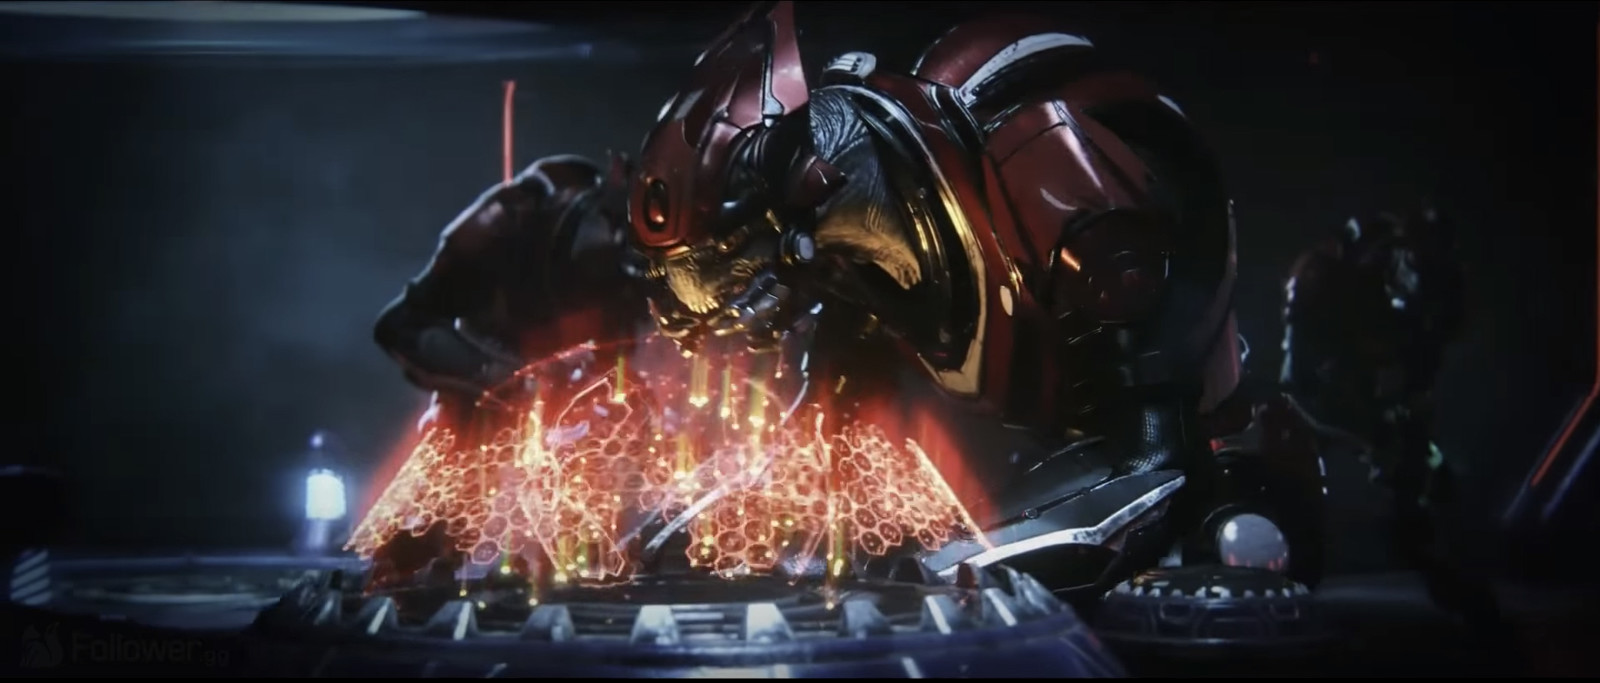 David Munoz Velazquez Blur Studio Halo Wars 2 Cinematic Cutscenes